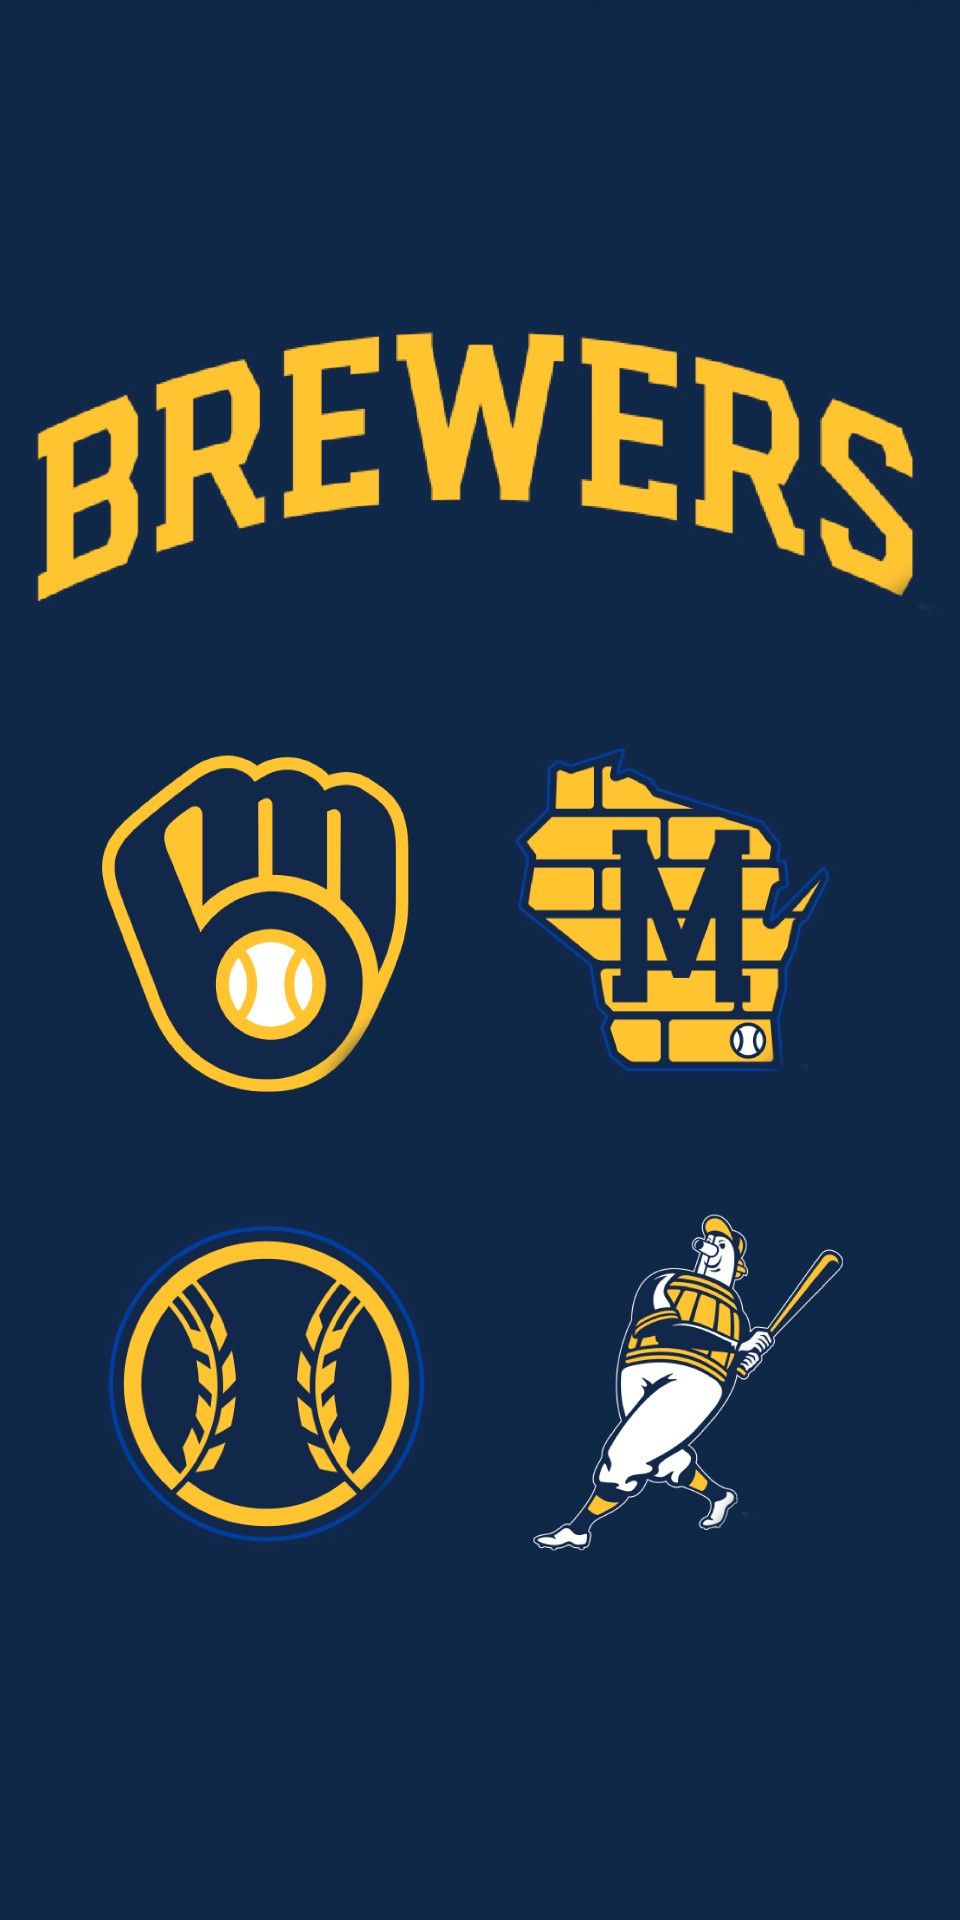 Brewers New School Wallpaper. Milwaukee brewers, Brewers, Brewers baseball